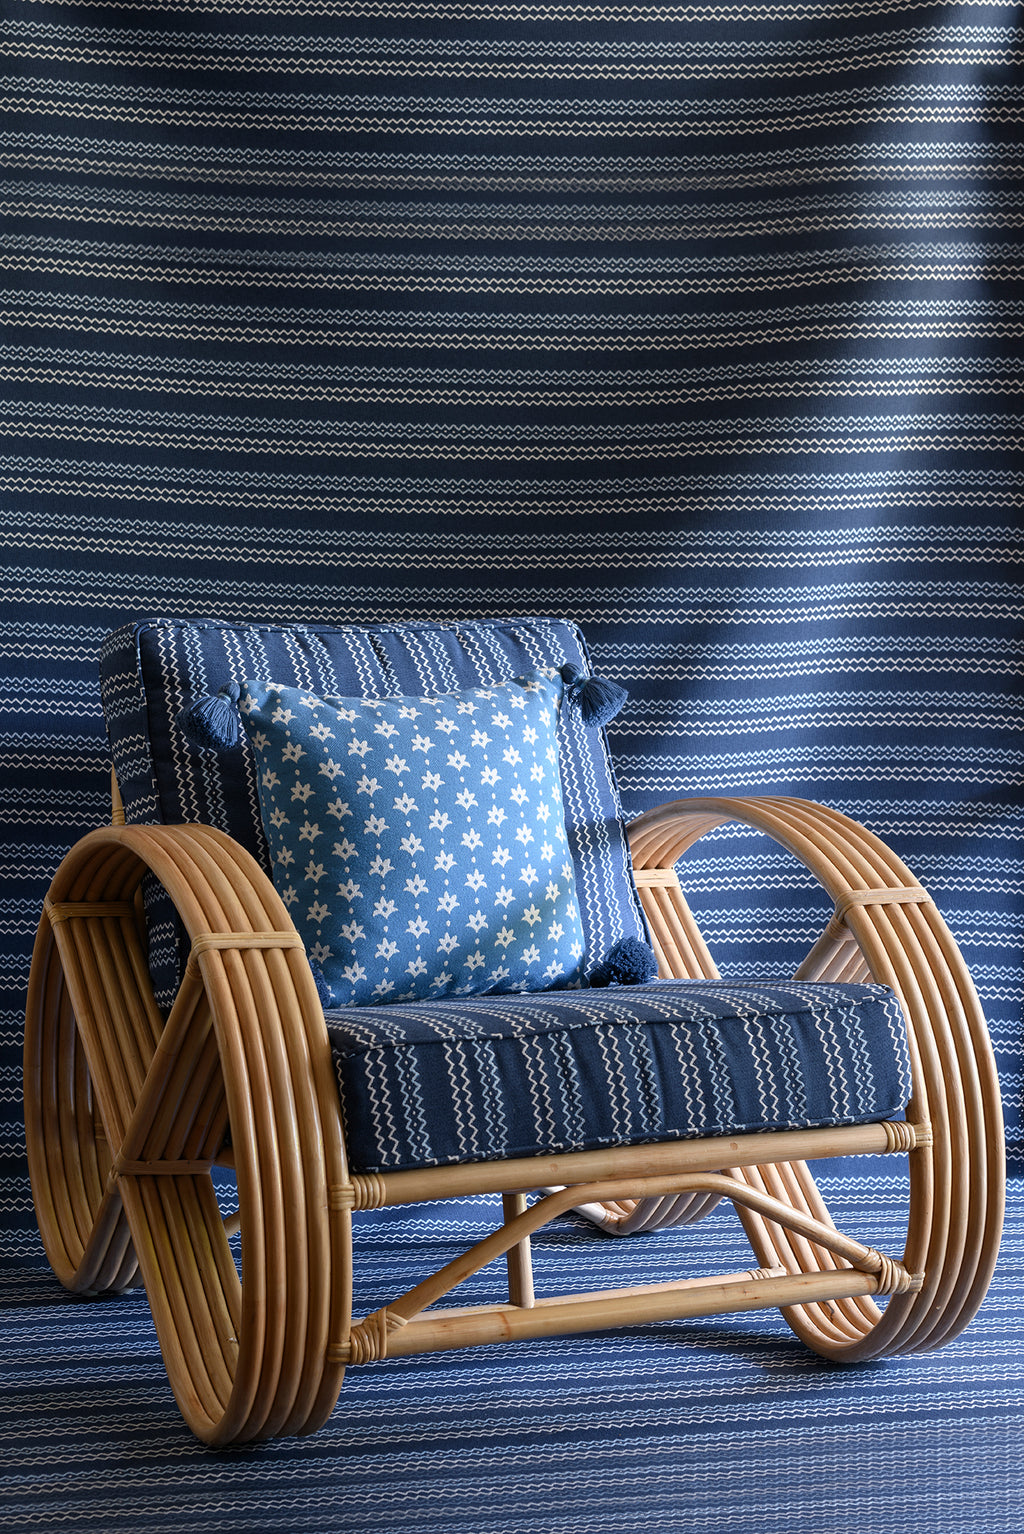 Avalon - Bondi Blue Outdoor Fabric - The Long Weekend Fabric House